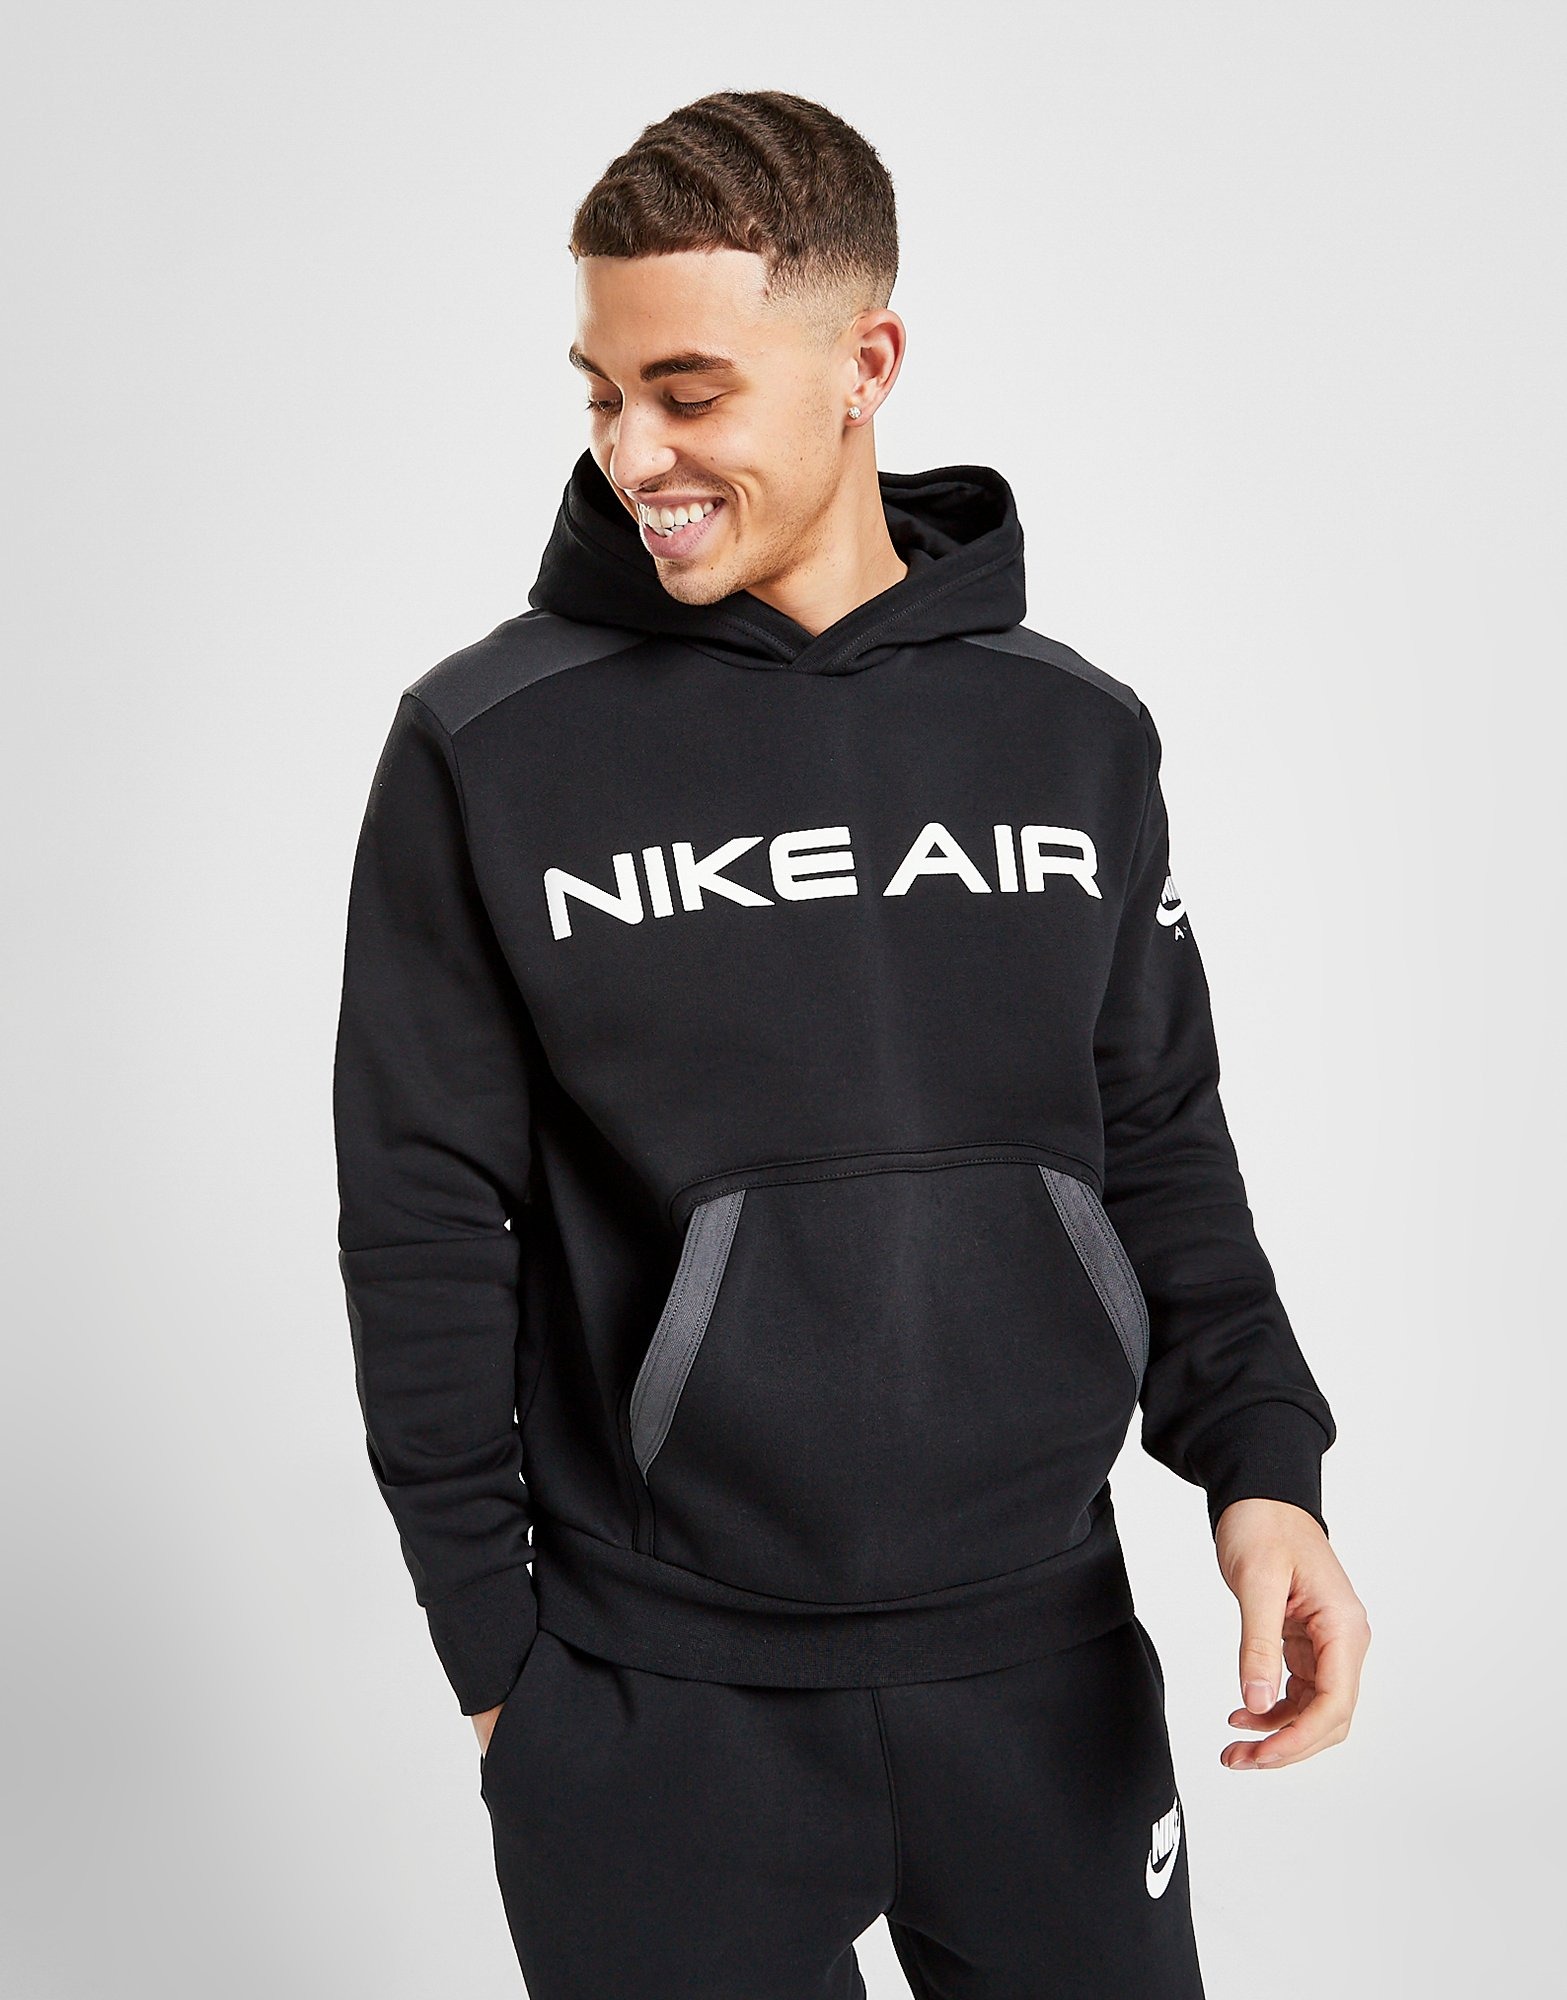  Nike  Air  Pullover Fleece  Hoodie  Herren Schwarz JD Sports